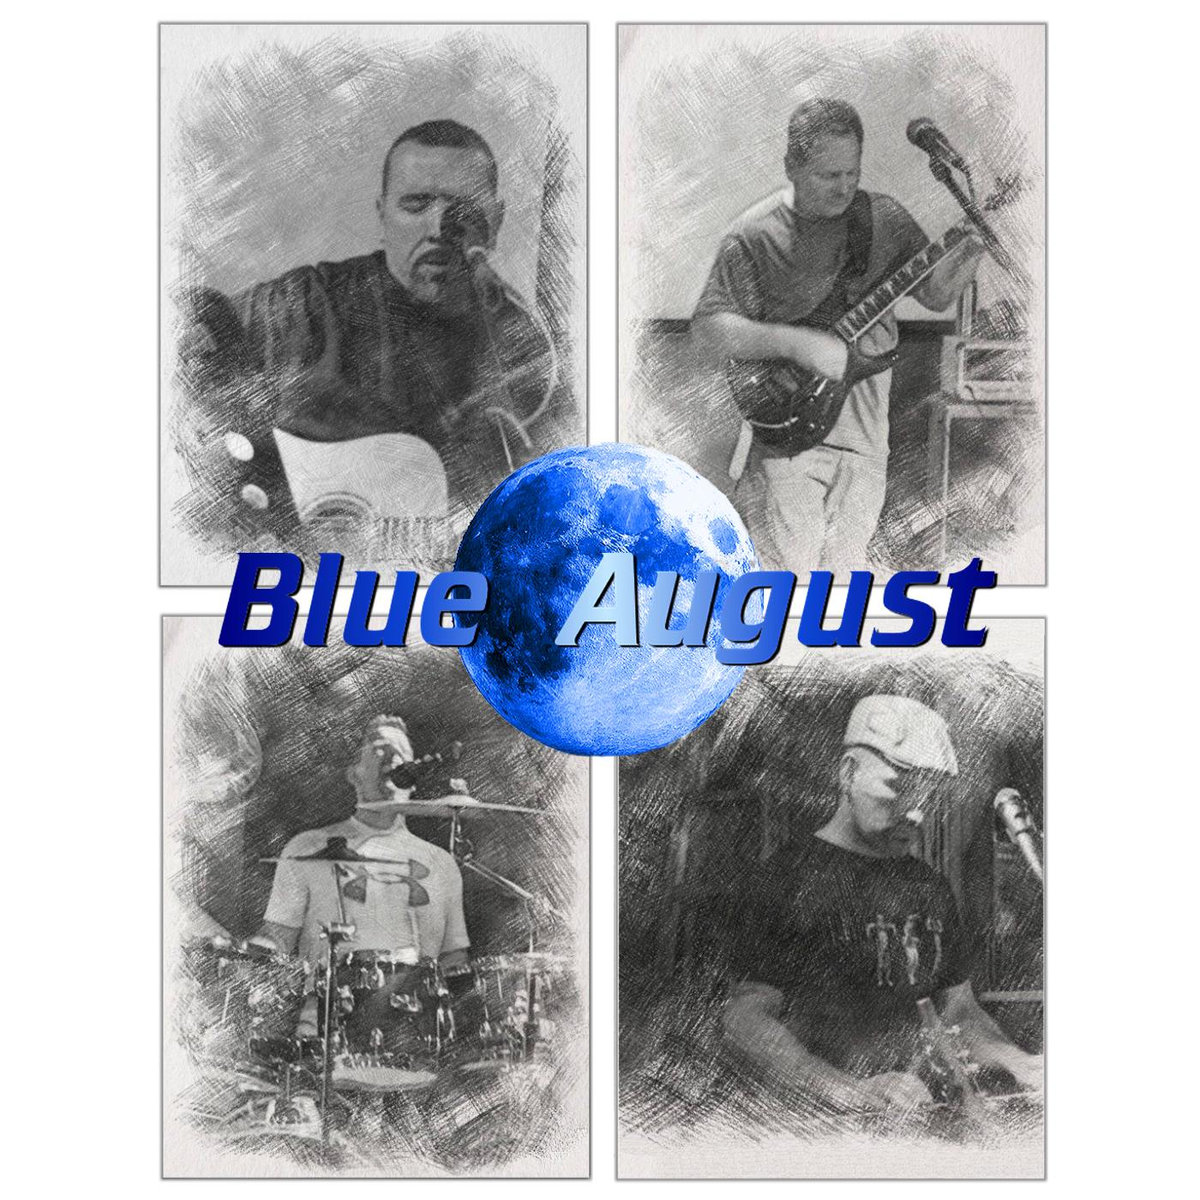 Blue August II - Local Rock Band Columbus Ohio